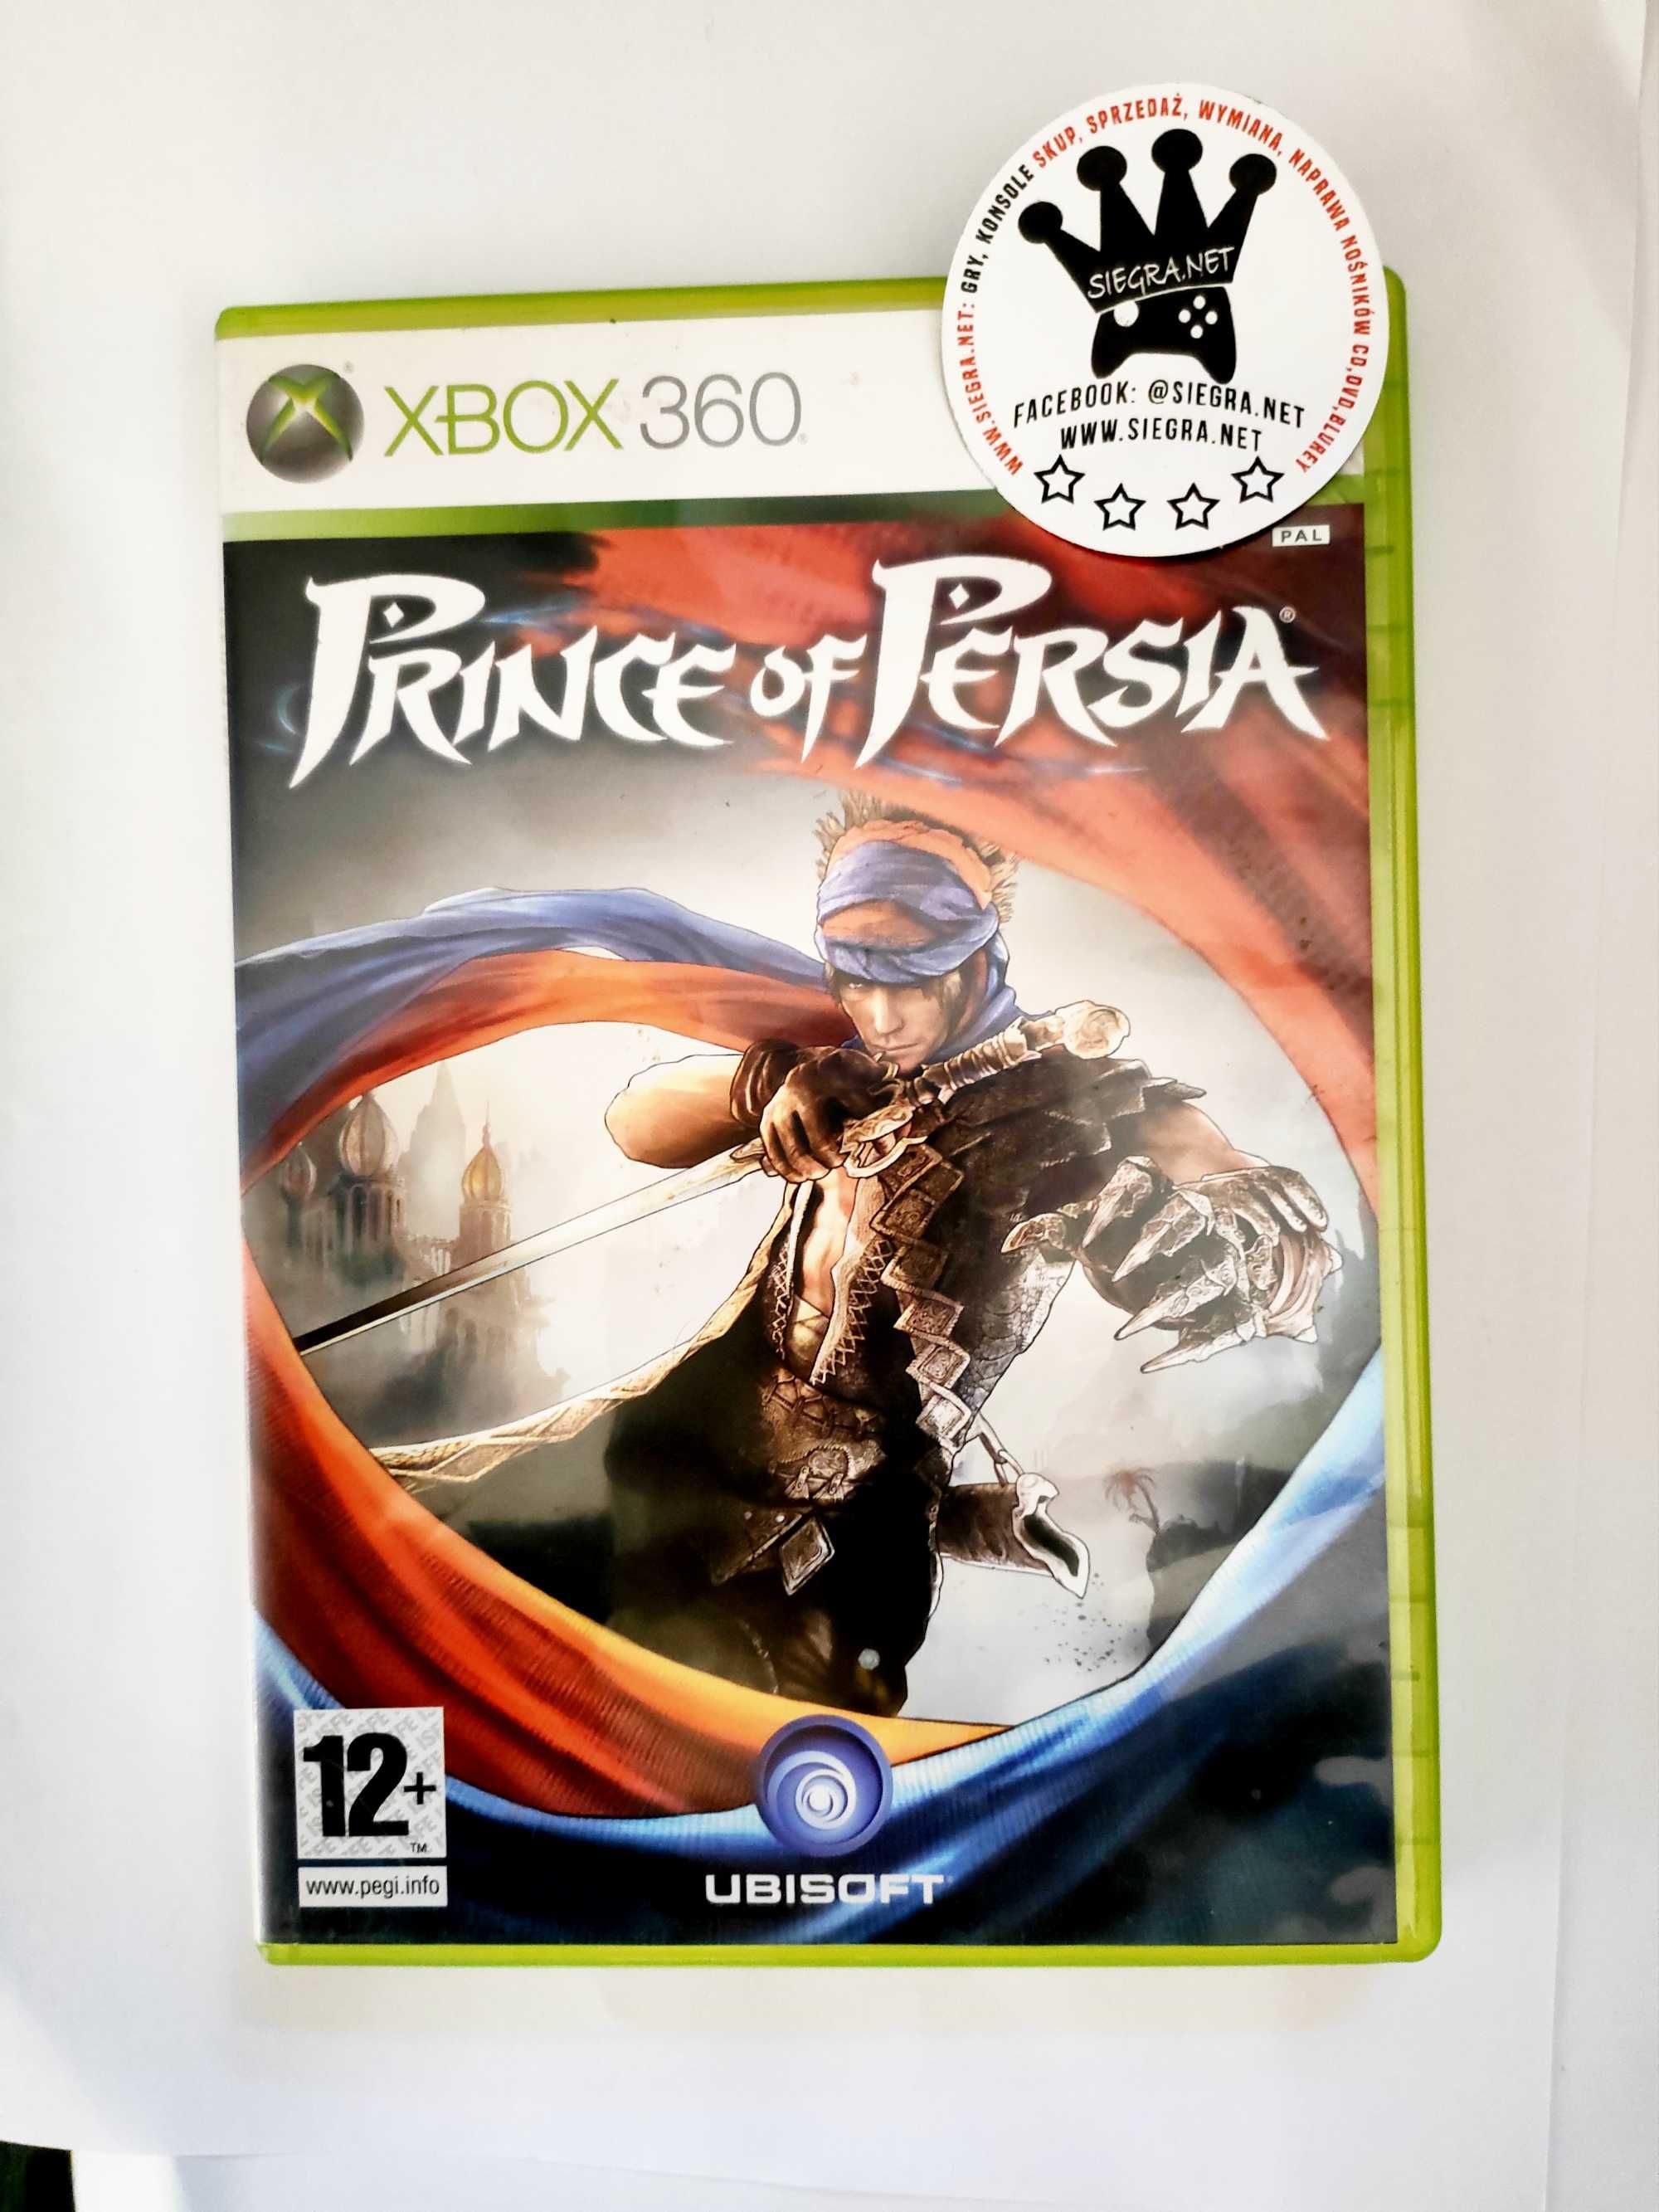 Prince of persia Xbox 360